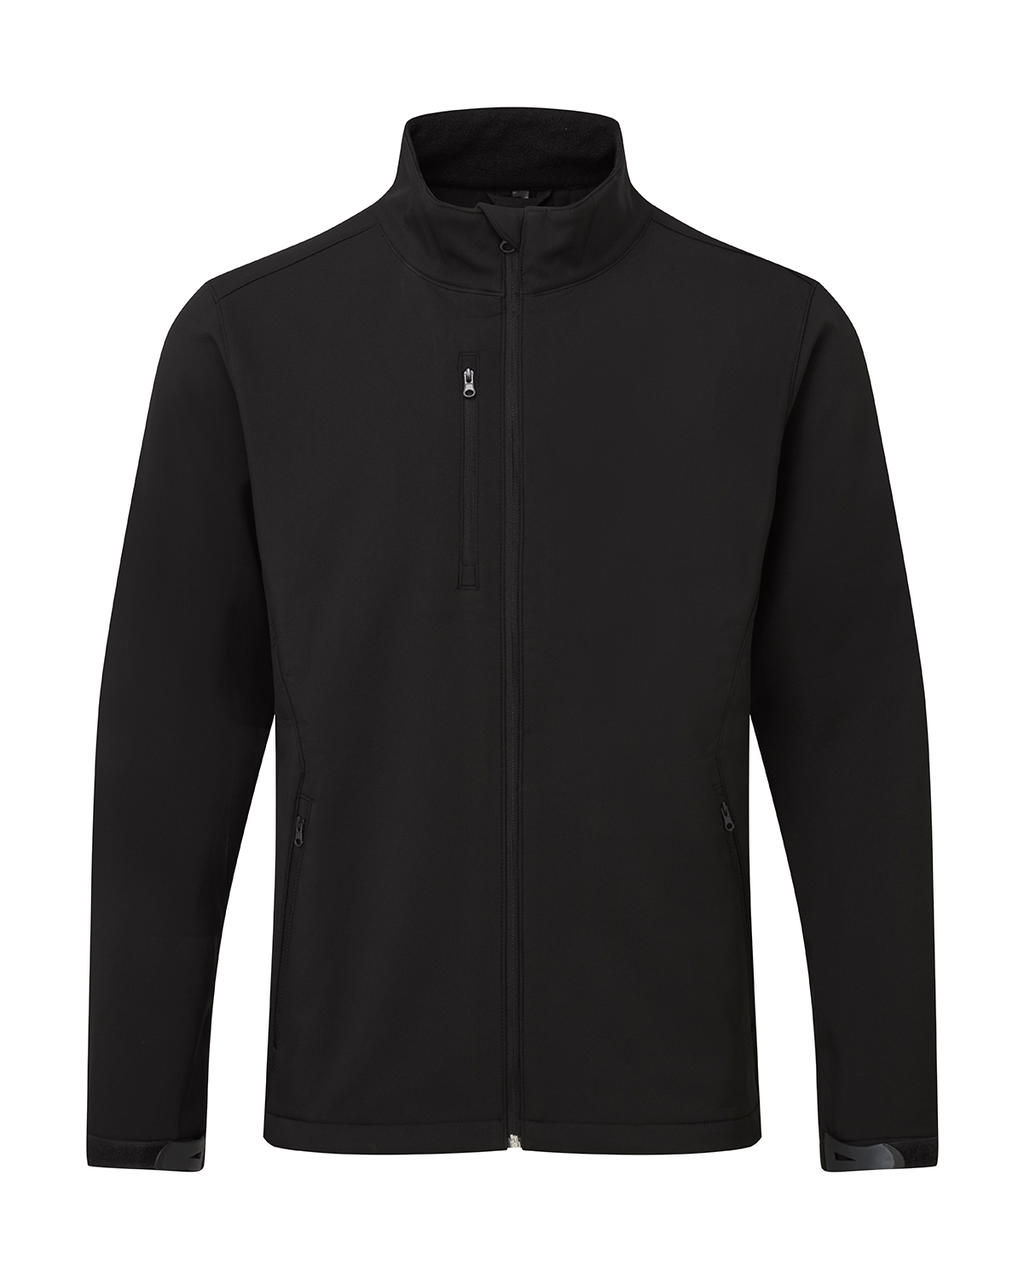  Mens Softshell Jacket in Farbe Black